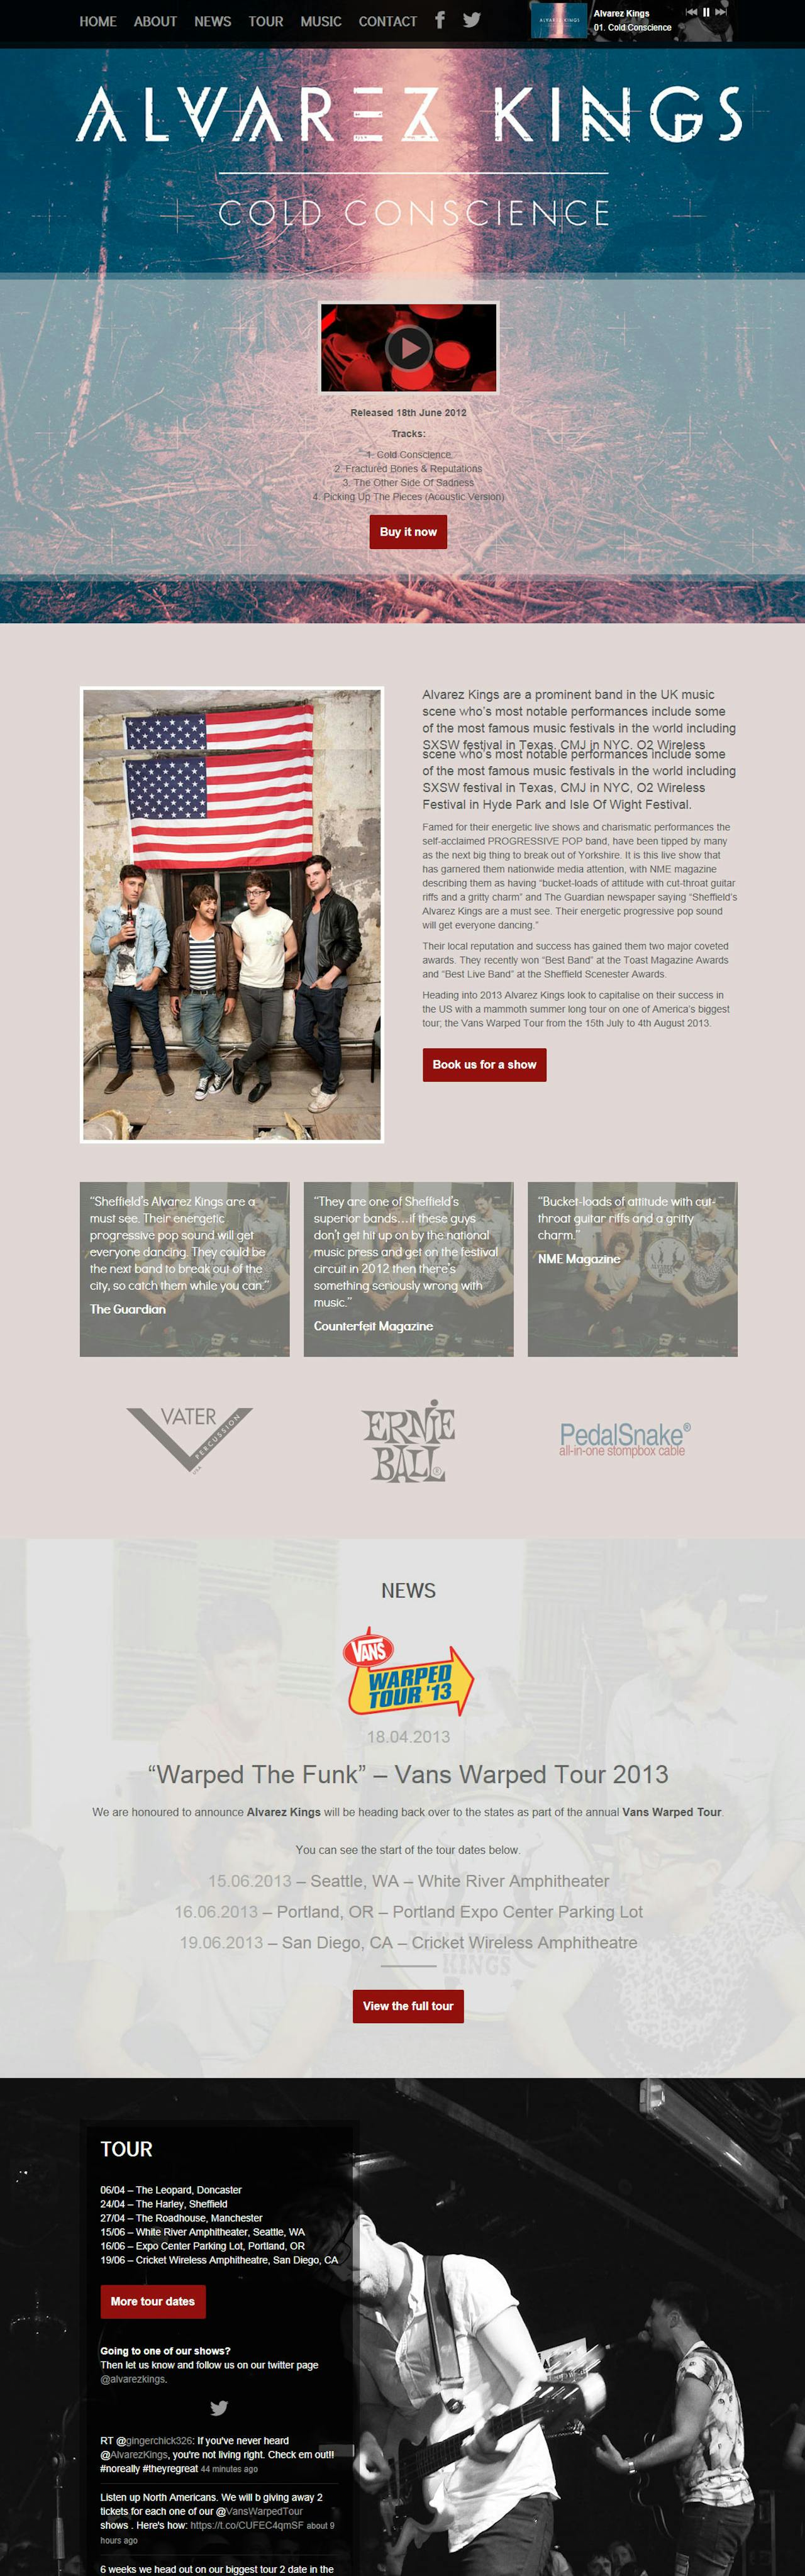 Alvarez Kings Website Screenshot